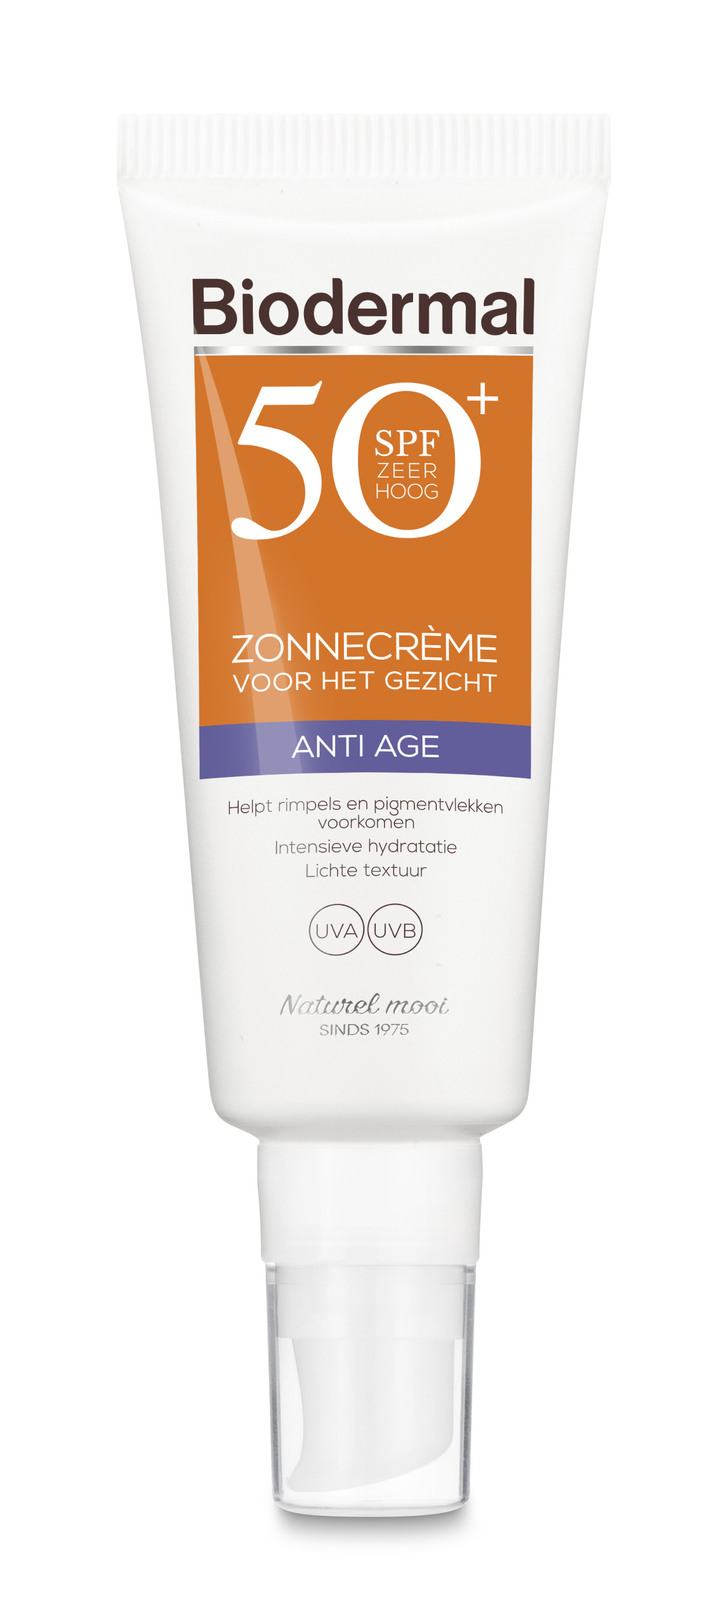 Image of Biodermal Anti Age Zonnecrème Gezicht SPF50+ 